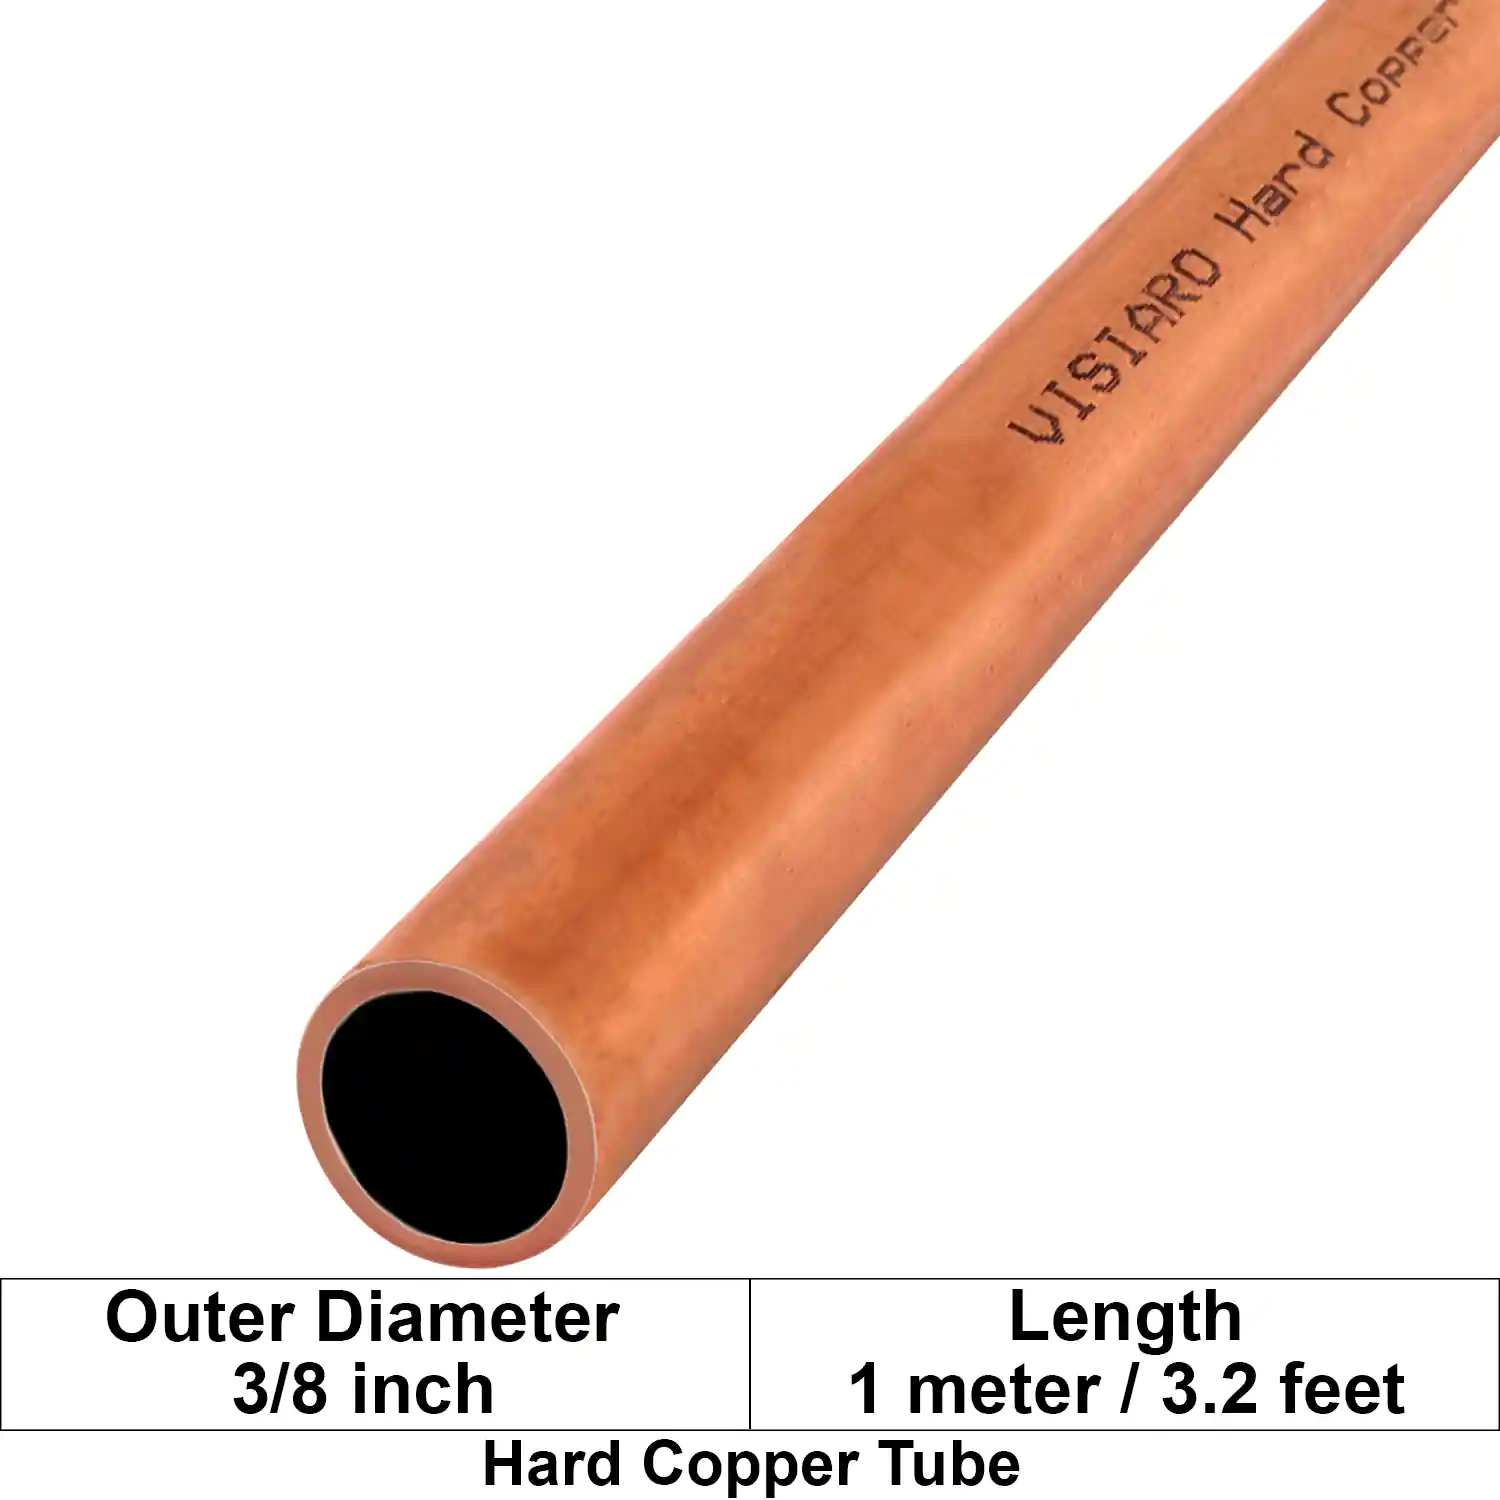 Visiaro Hard Copper Tube 1mtr long Outer Diameter - 3/8 inch